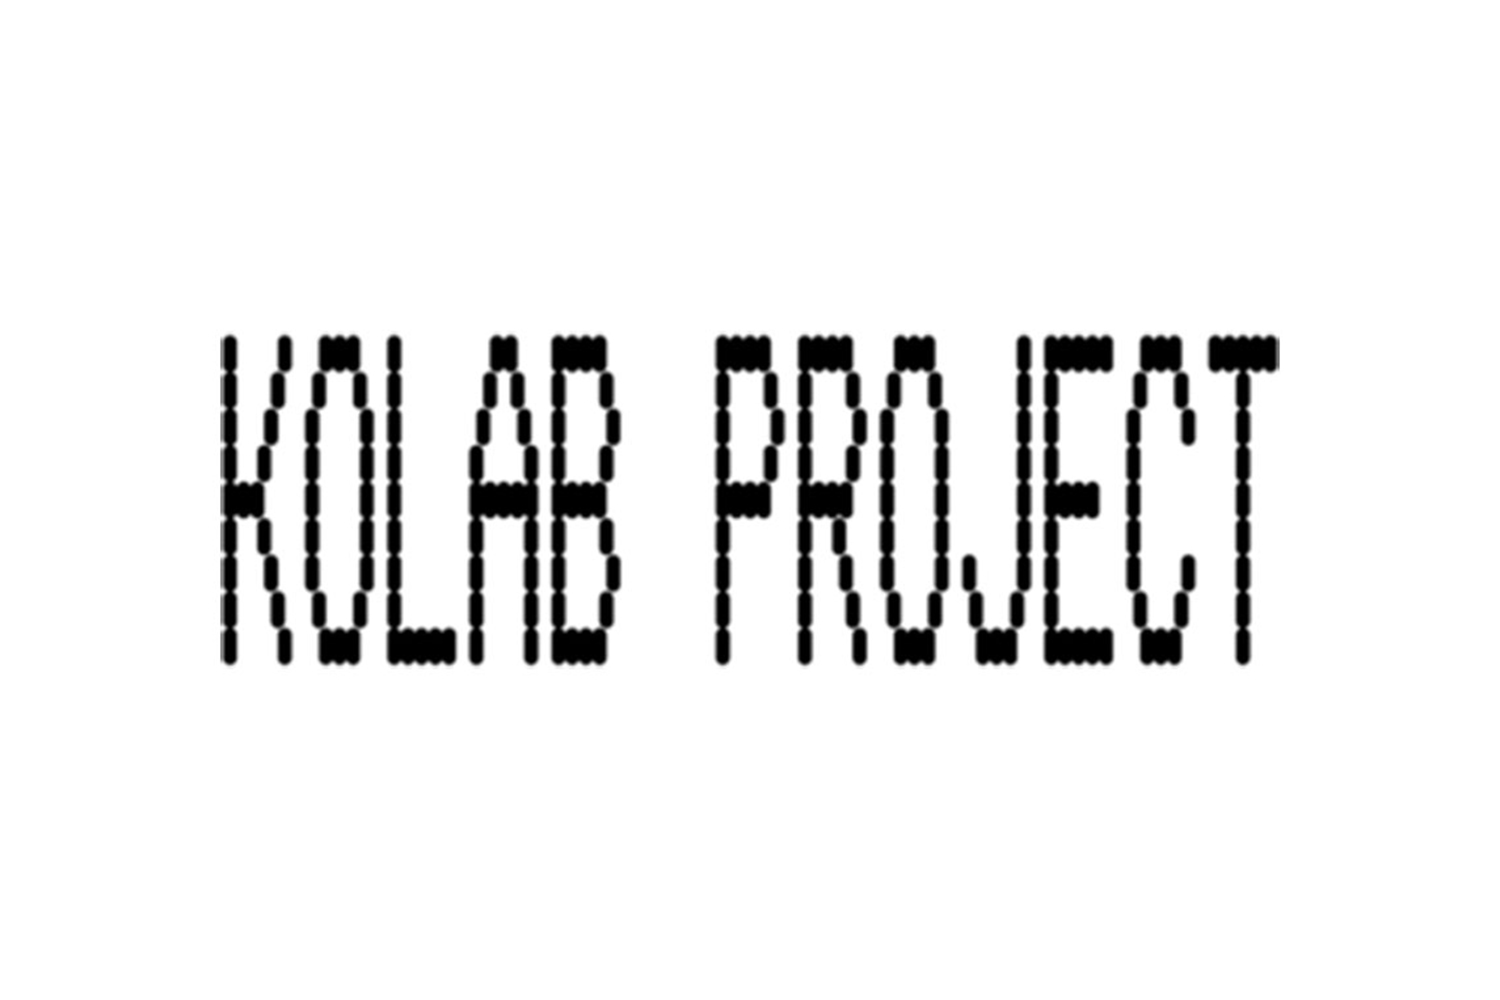 kolab project